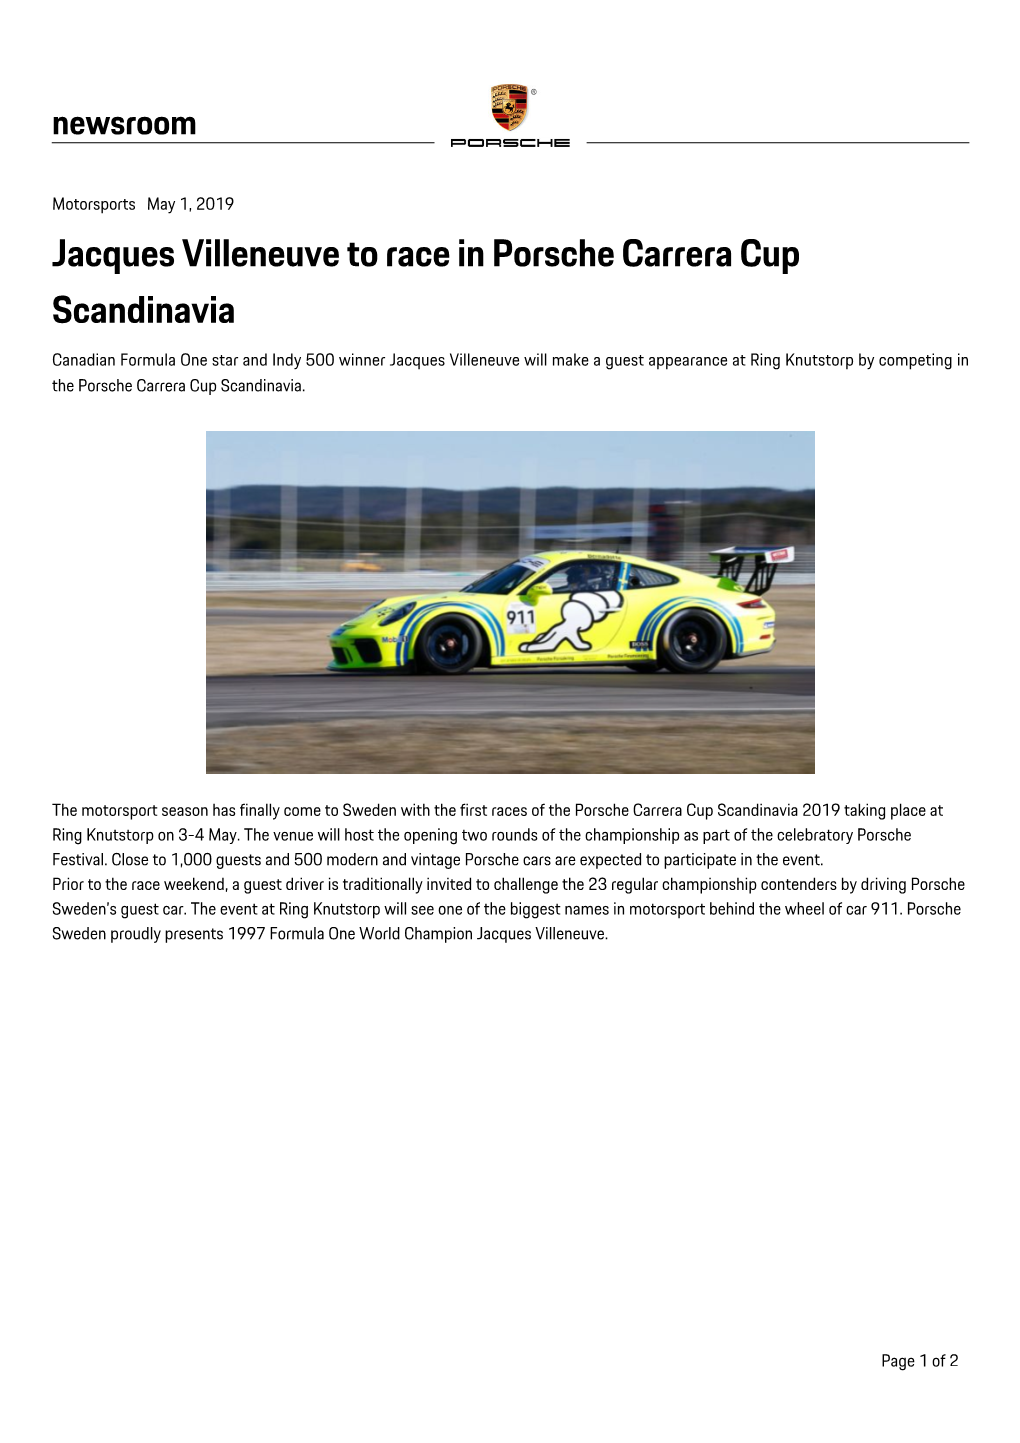 Jacques Villeneuve to Race in Porsche Carrera Cup Scandinavia